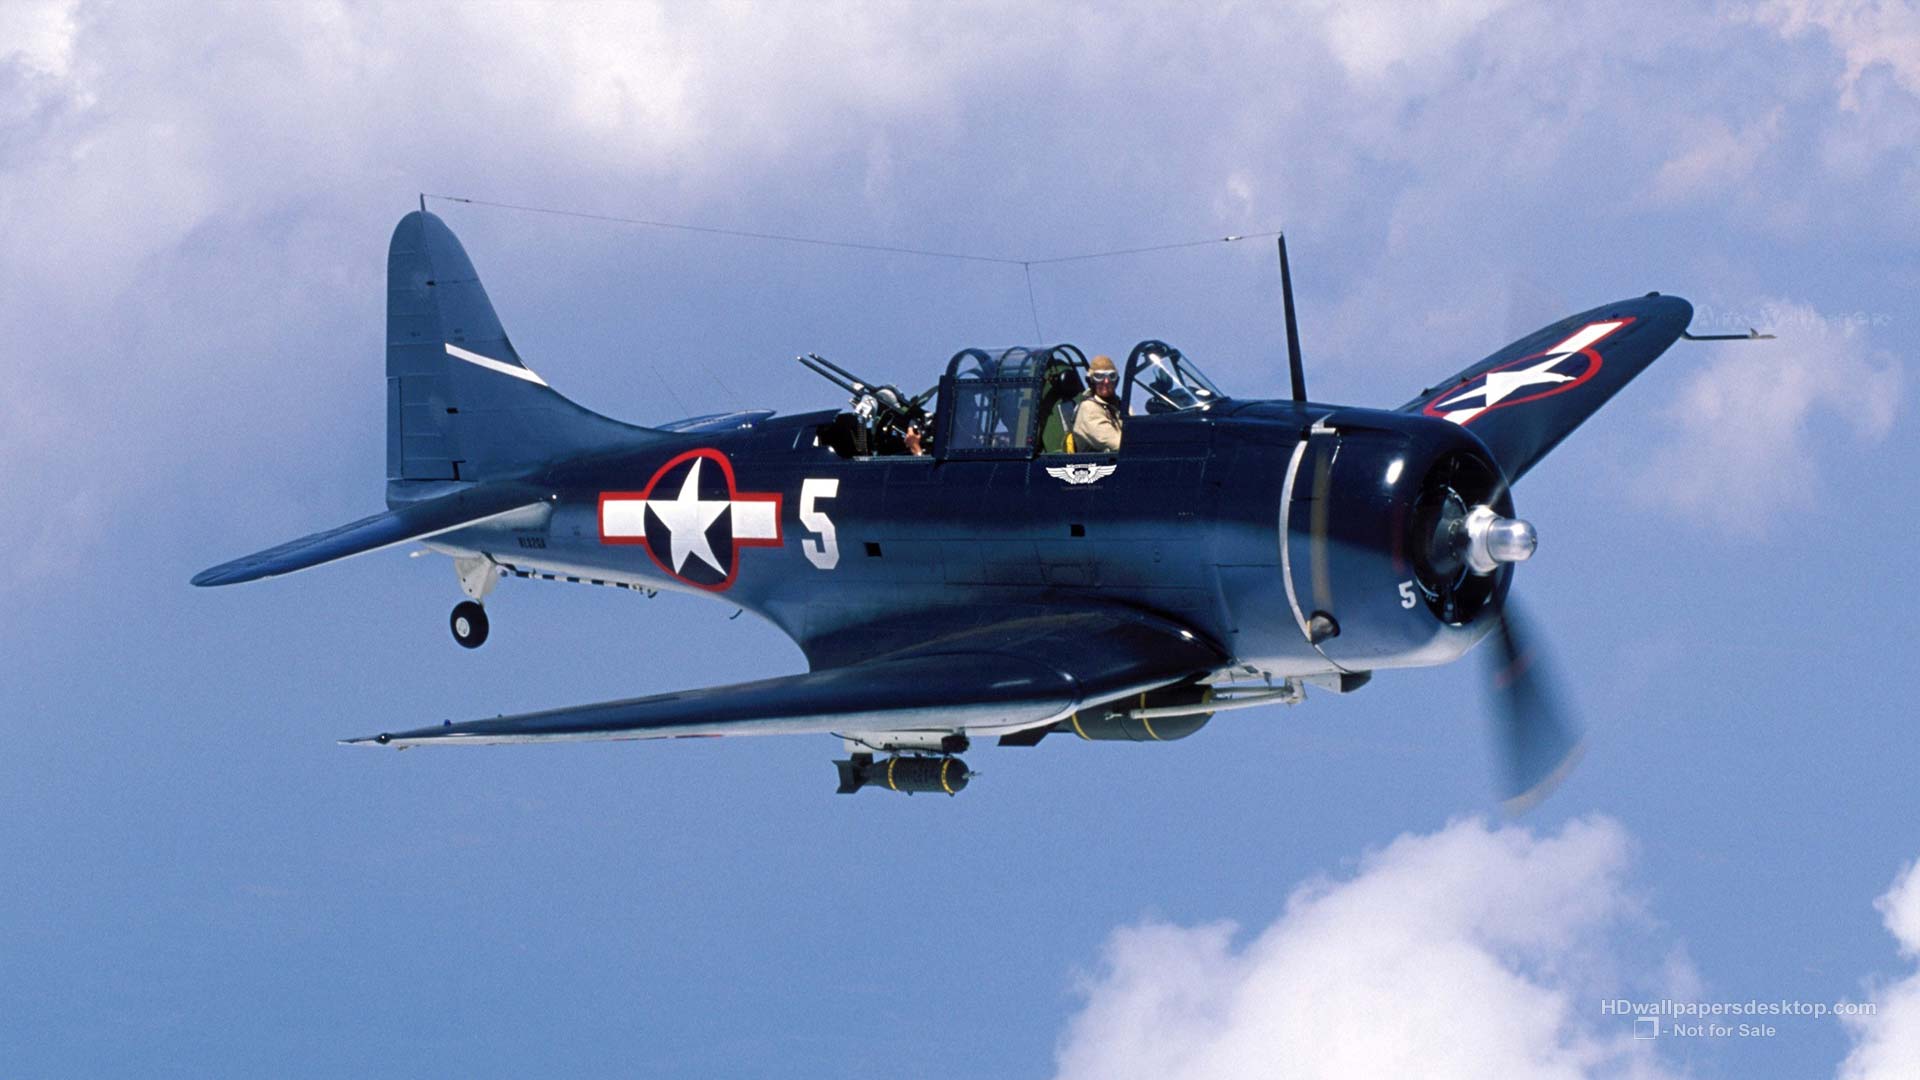 War Planes Ww2 Cool Wallpaper. I HD Image